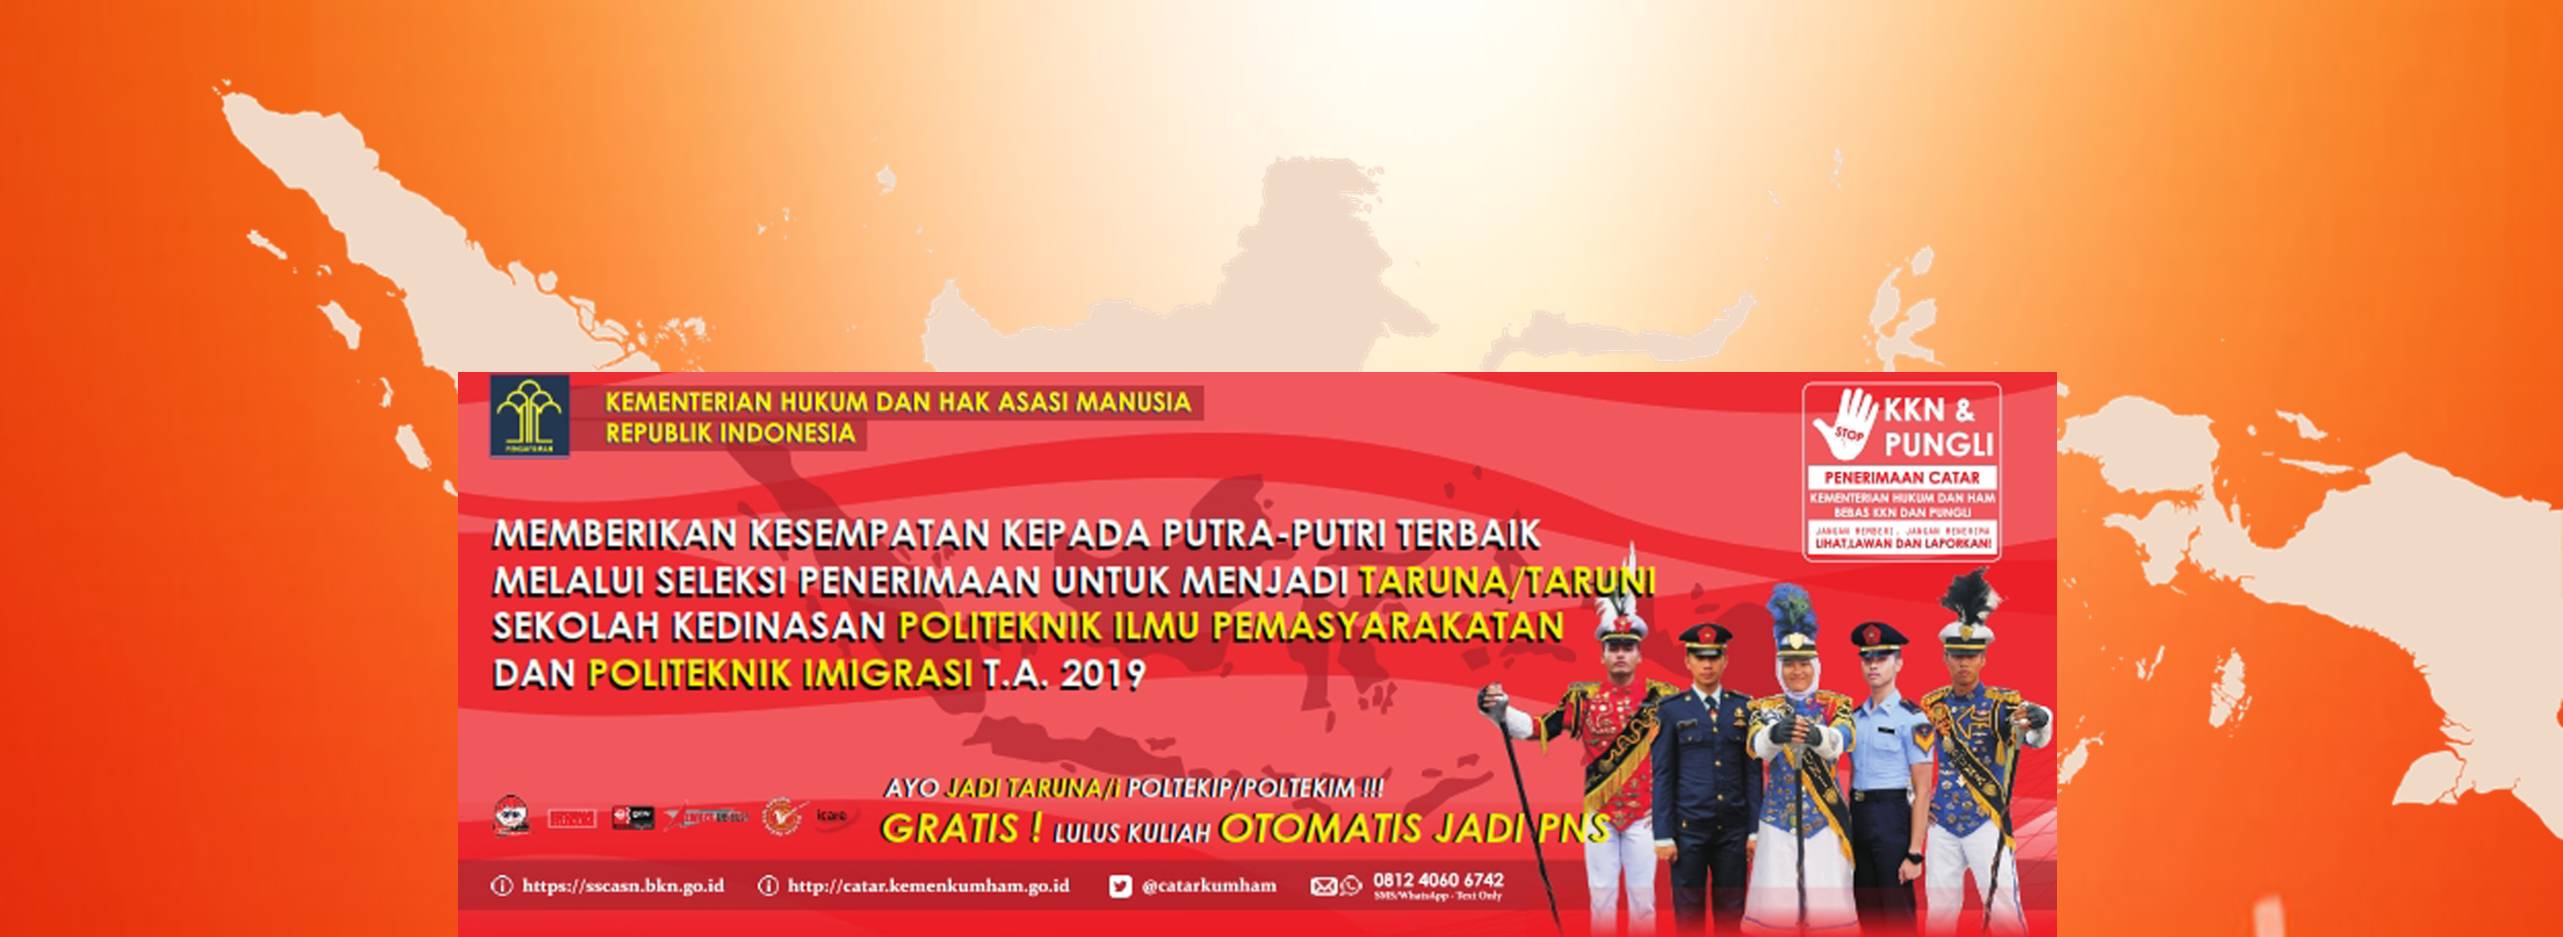 Kantor Wilayah Kementerian Hukum Dan Hak Asasi M Ia Daerah Istimewa Yogyakarta